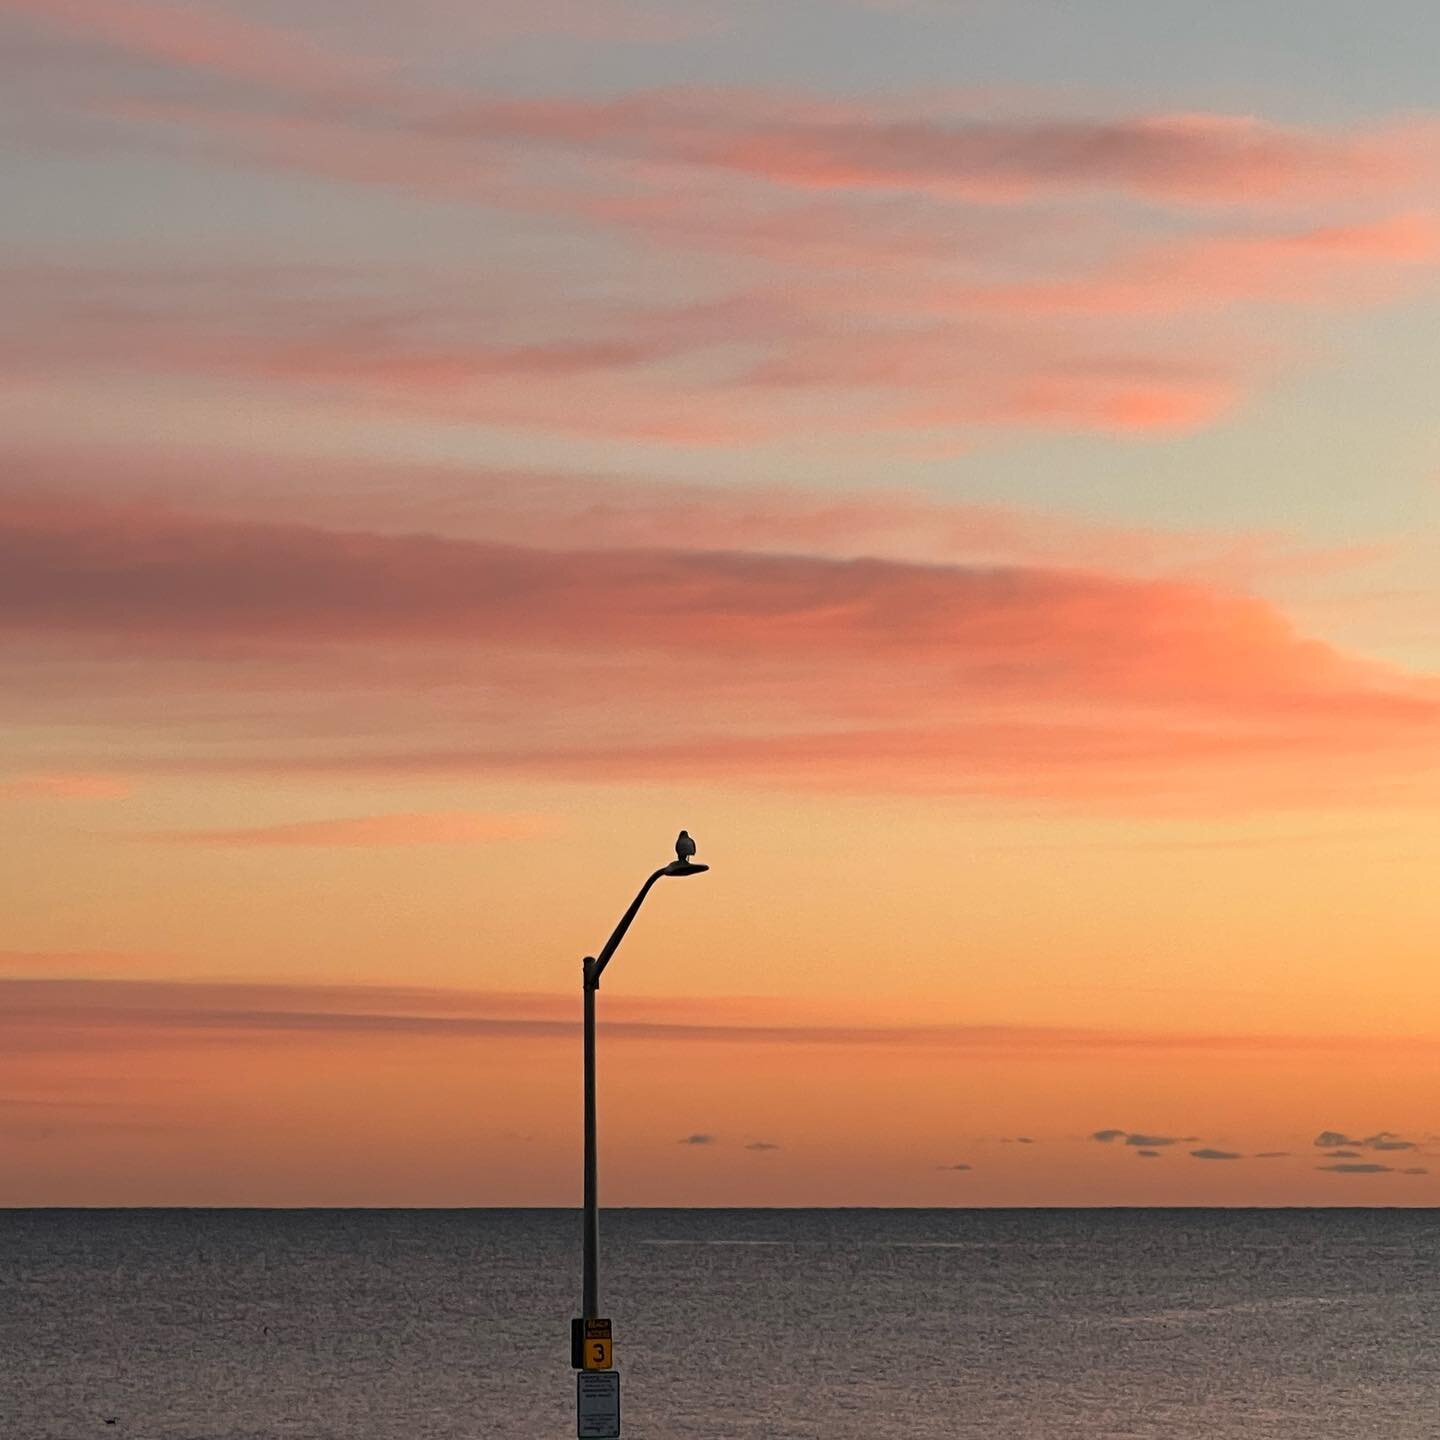 Hull on a light post at sunrise. ☺️

#seagull #ocean #sunrise